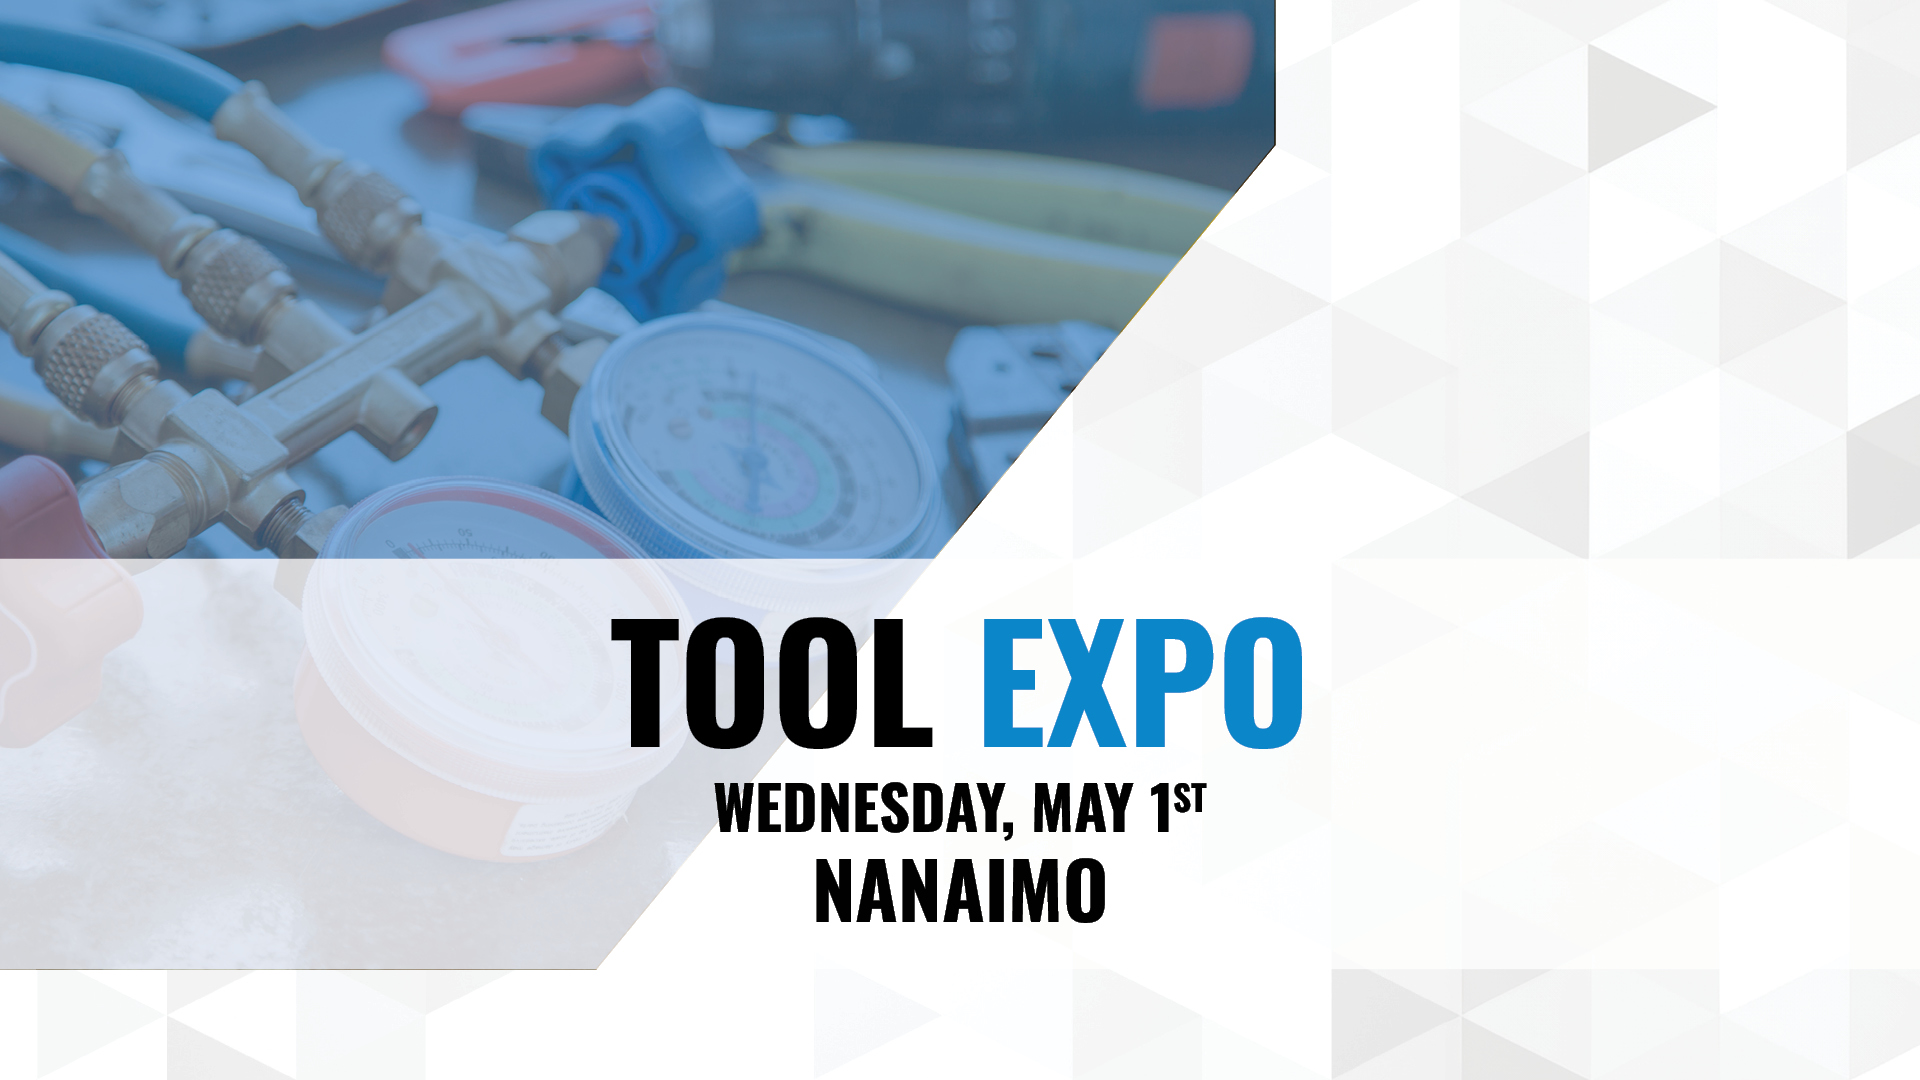 Tool Expo Tradeshow in Nanaimo